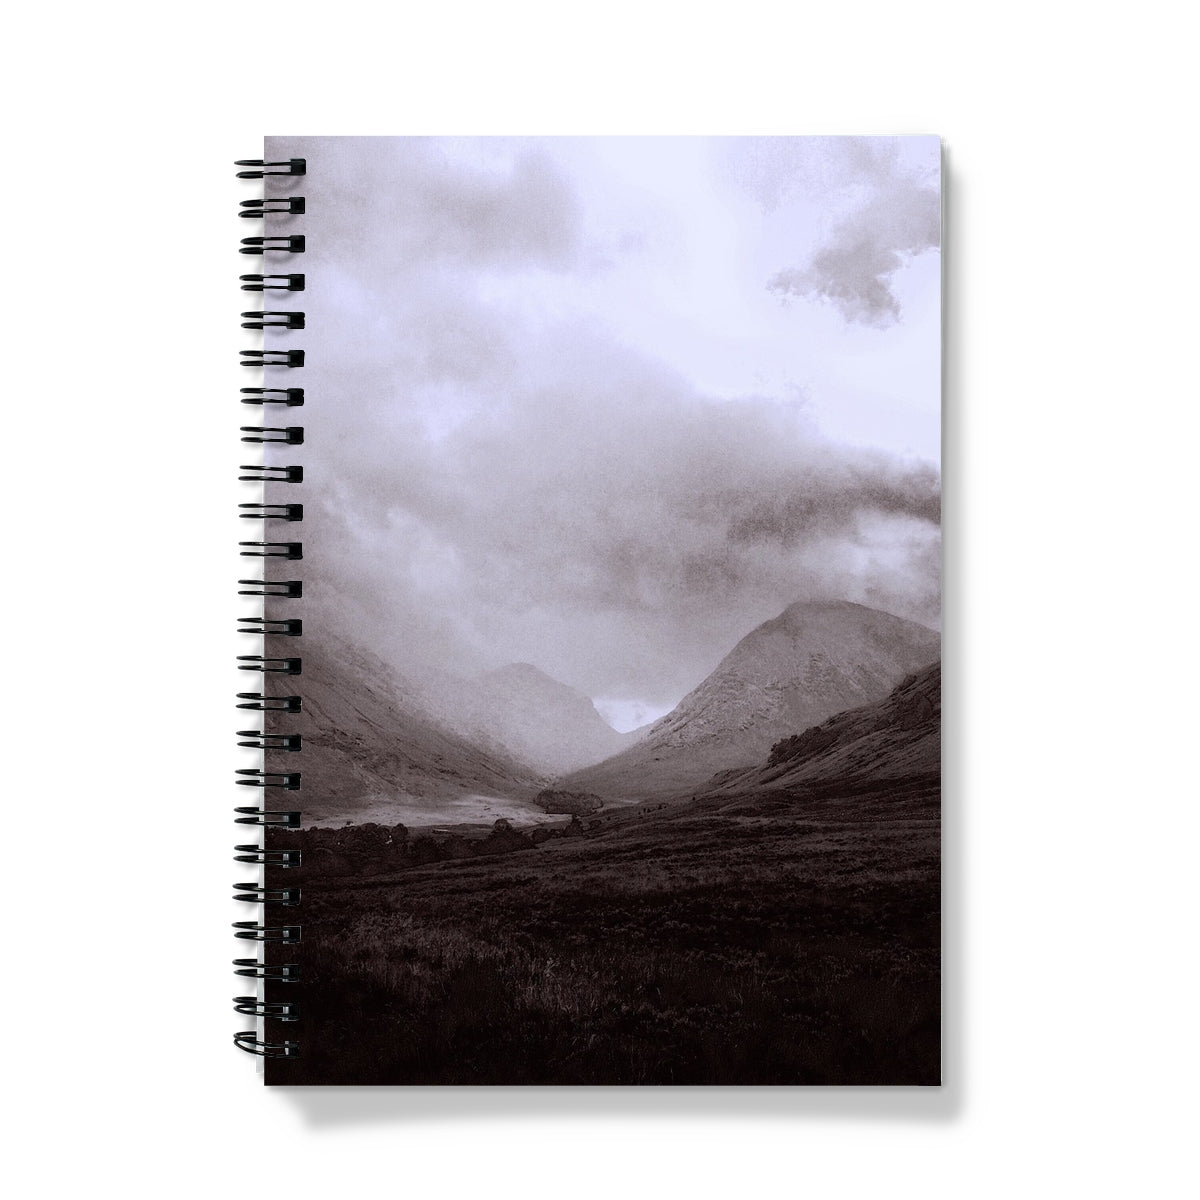 Glencoe Mist Art Gifts Notebook-Journals & Notebooks-Glencoe Art Gallery-A5-Graph-Paintings, Prints, Homeware, Art Gifts From Scotland By Scottish Artist Kevin Hunter